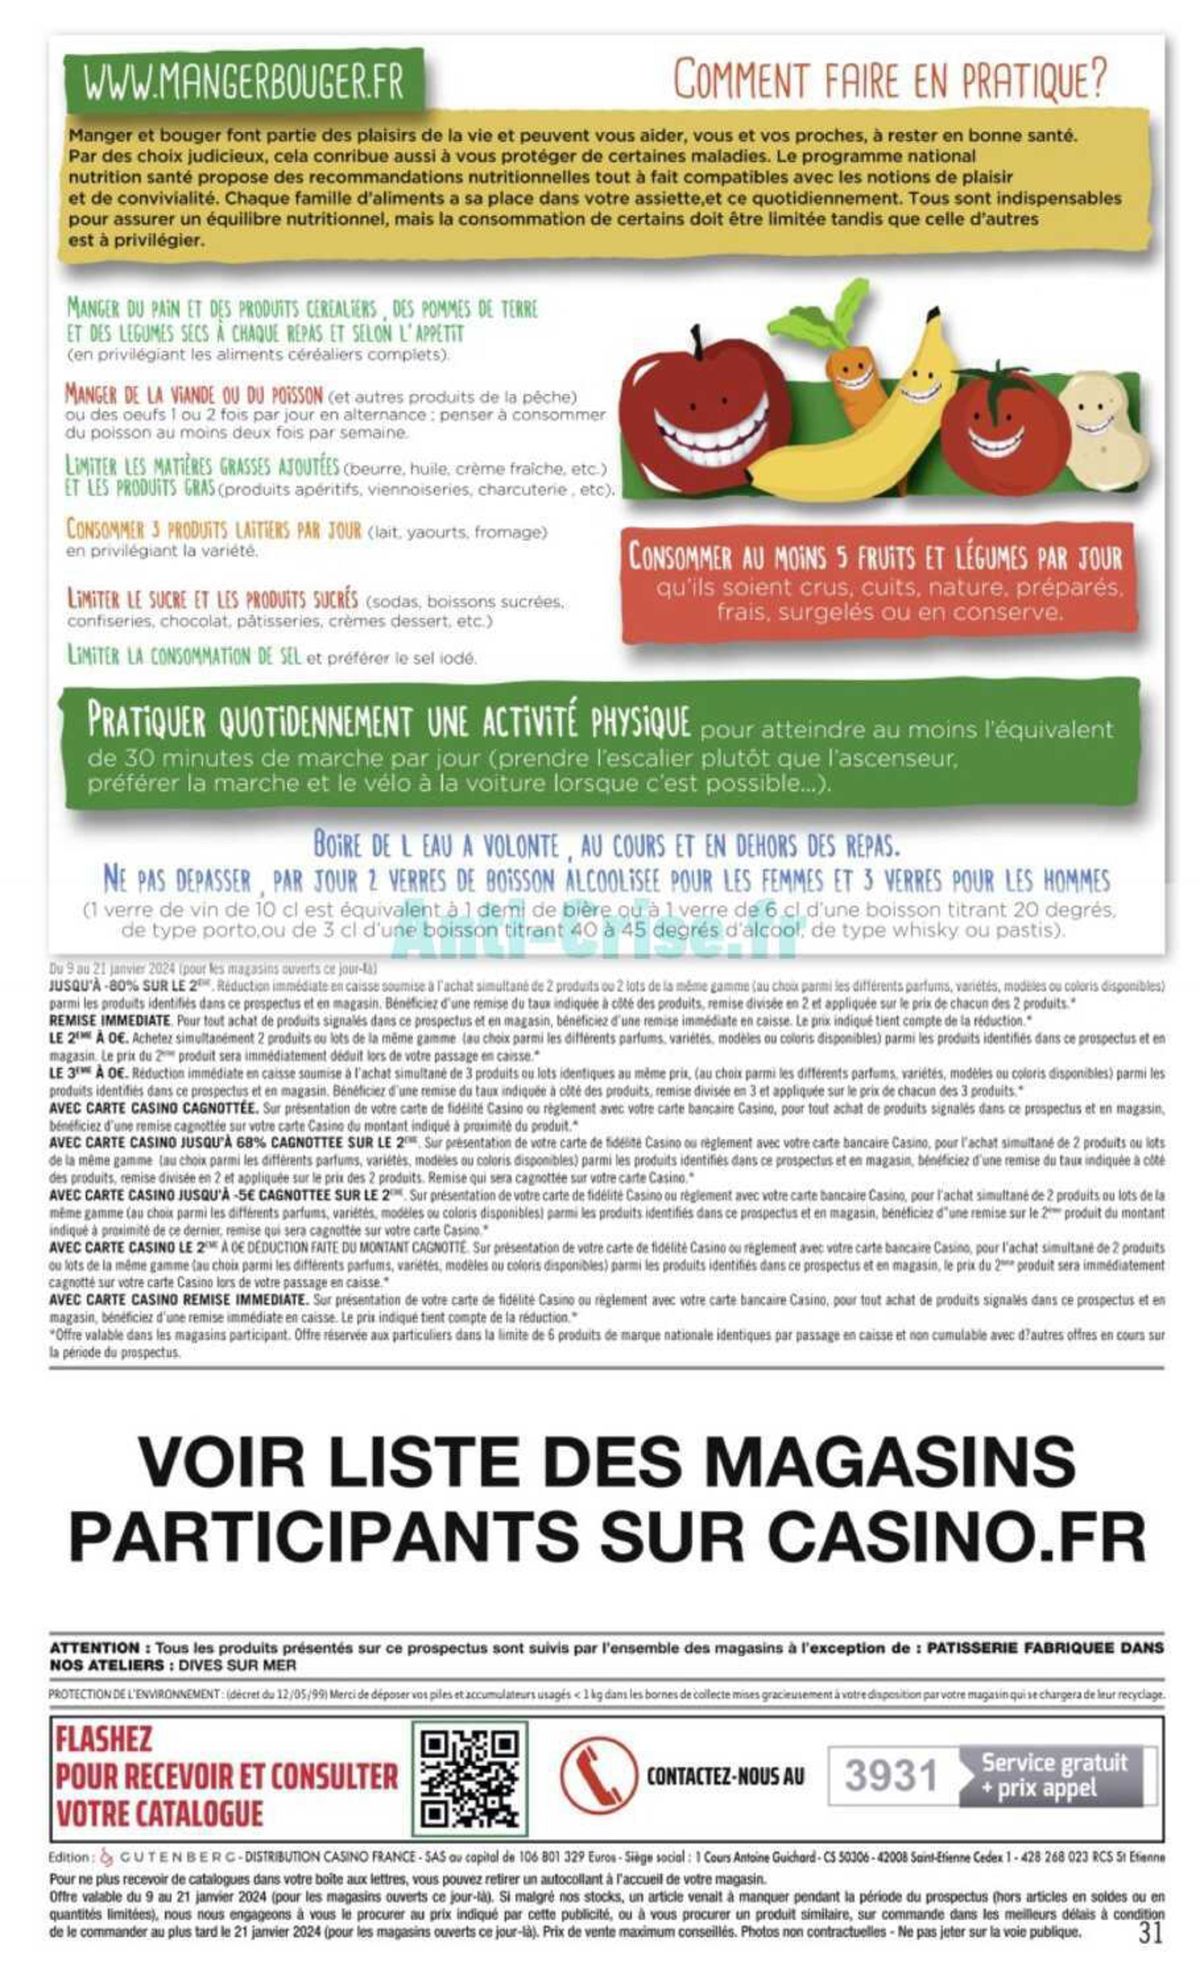 Catalogue Catalogue Géant Casino, page 00024